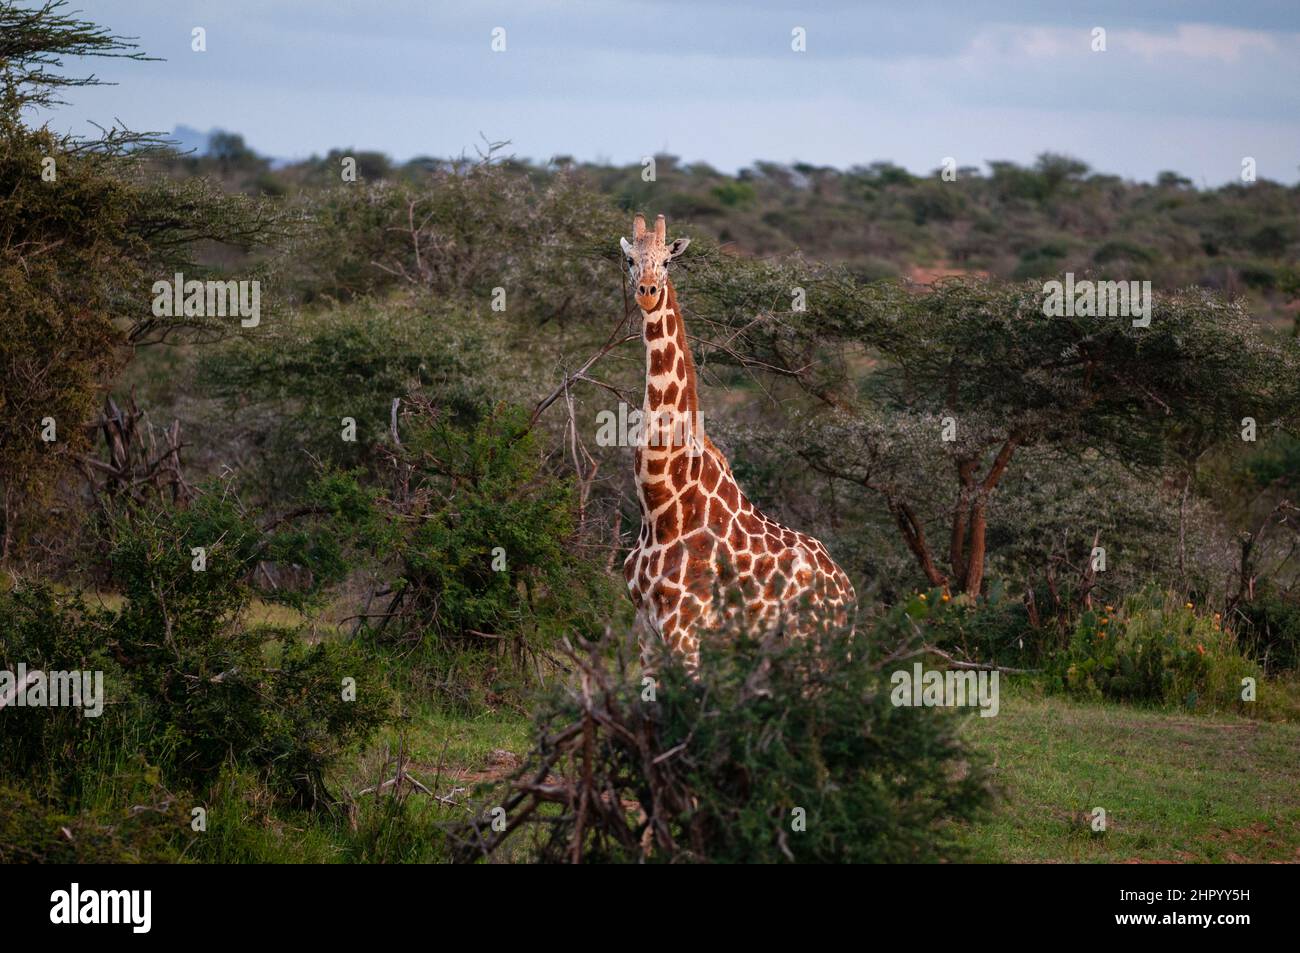 A reticulated giraffe, Giraffa camelopardalis reticulata, among thorny acacia trees. Loisaba Wilderness Conservancy, Laikipia District, Kenya. Stock Photo